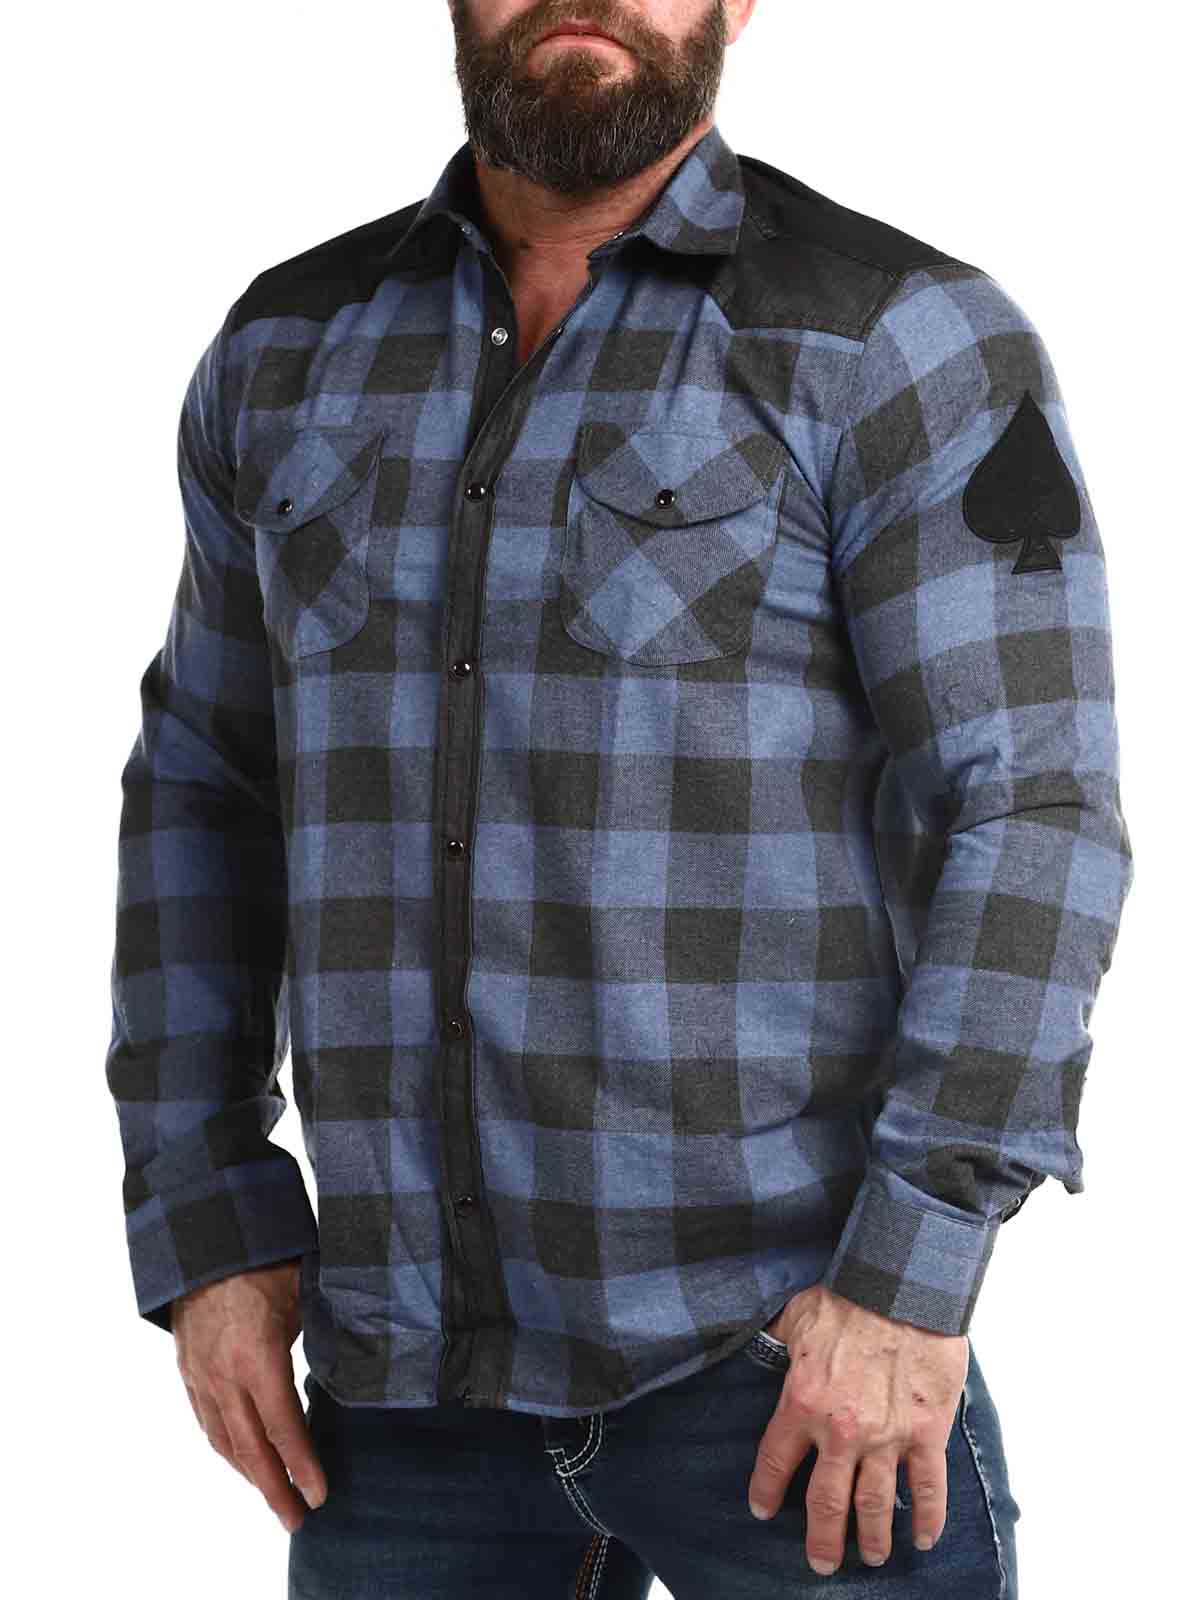 RD Lumberjack Shirt4.jpg